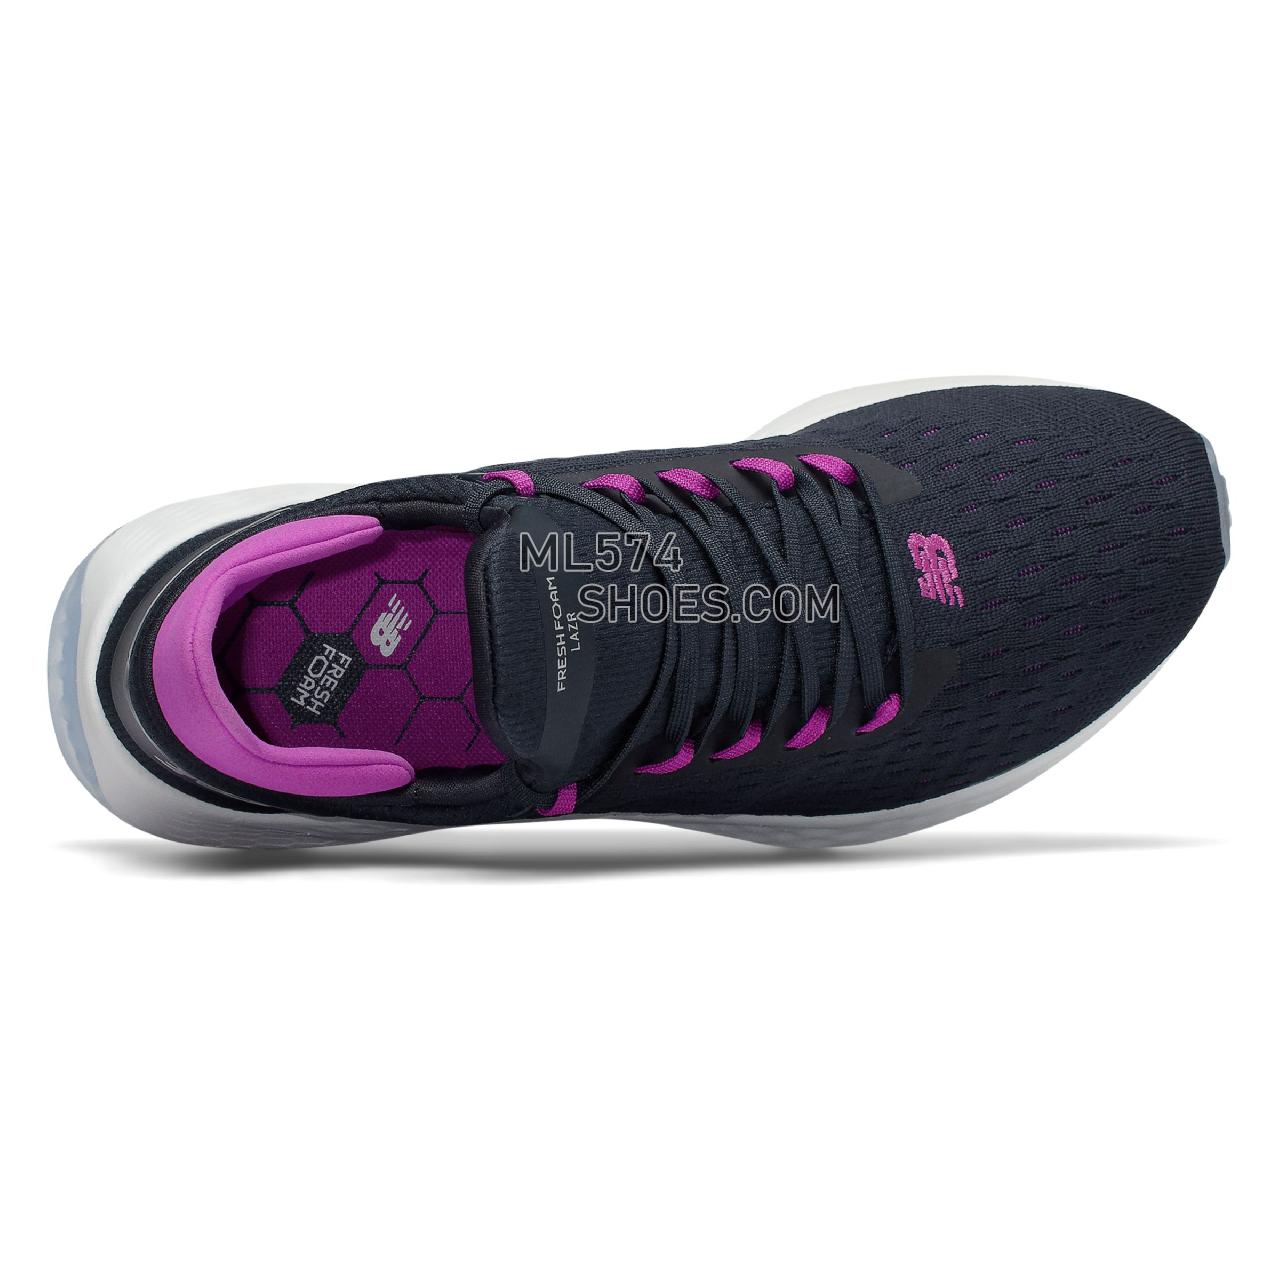 New Balance Fresh Foam Lazr v2 HypoKnit - Women's Neutral Running - Eclipse with Voltage Violet - WLZHKLN2